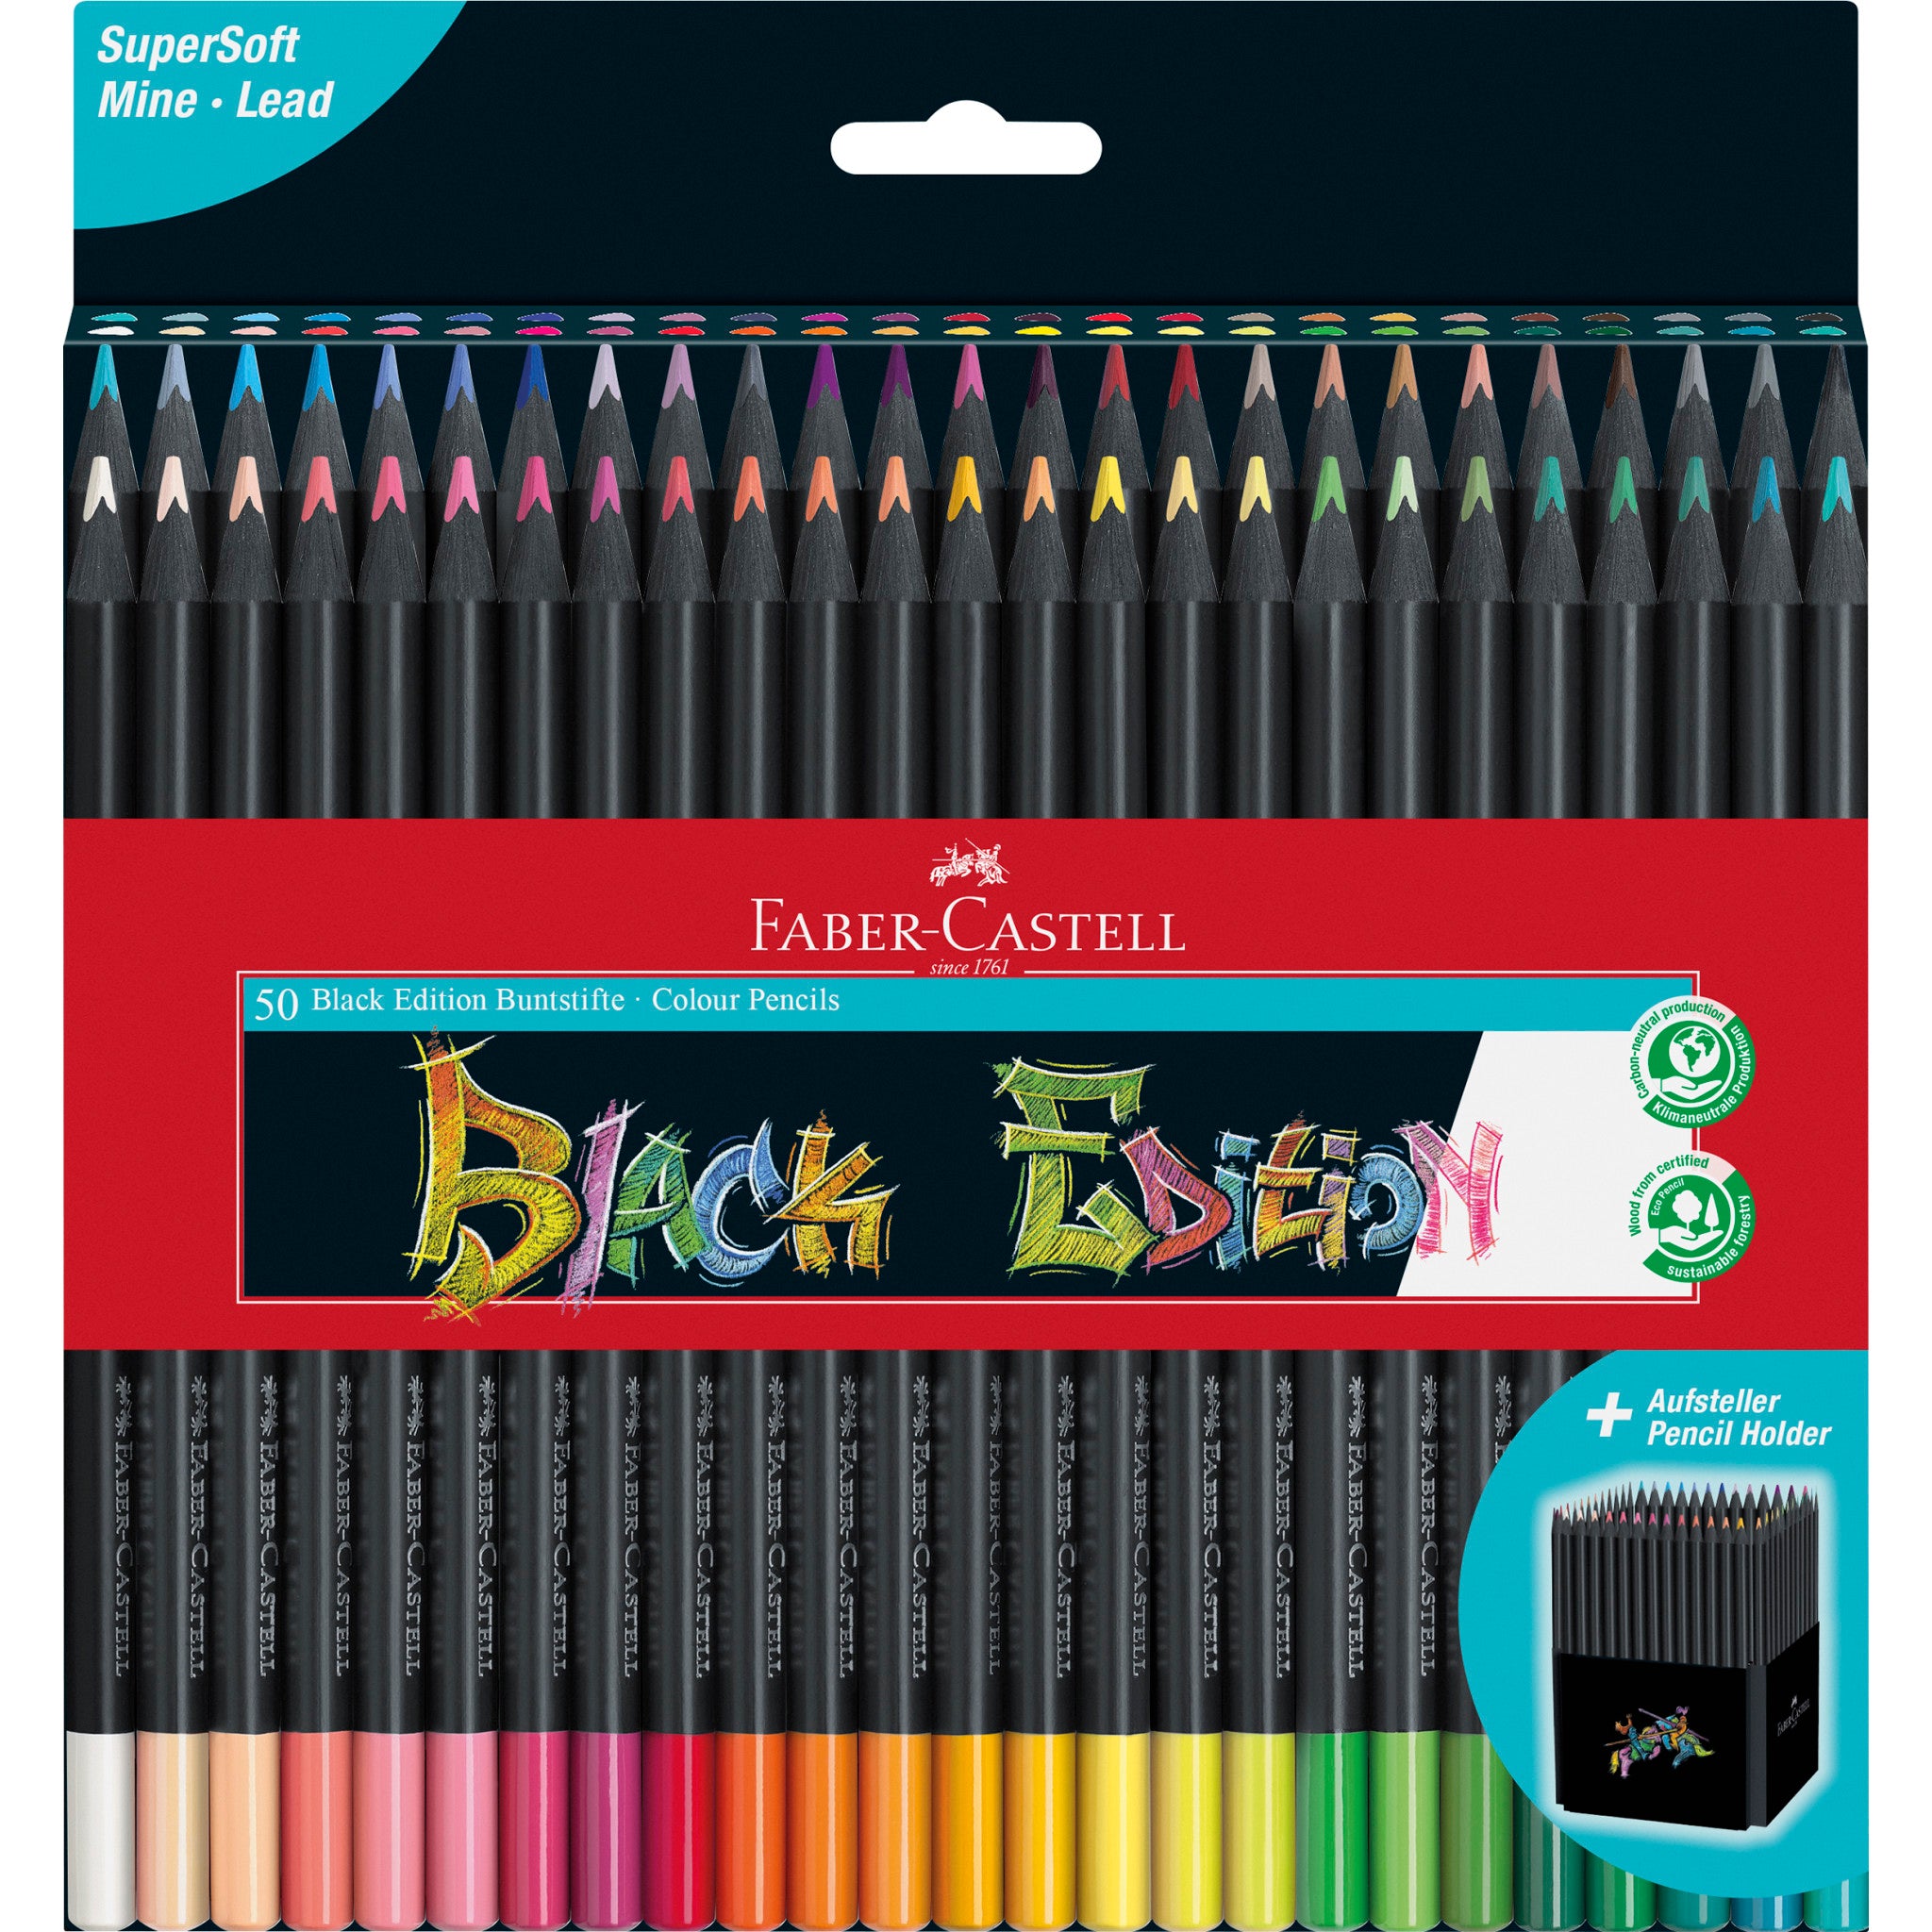 120 Colored Pencils Professional Soft Core Colored Leads Unique